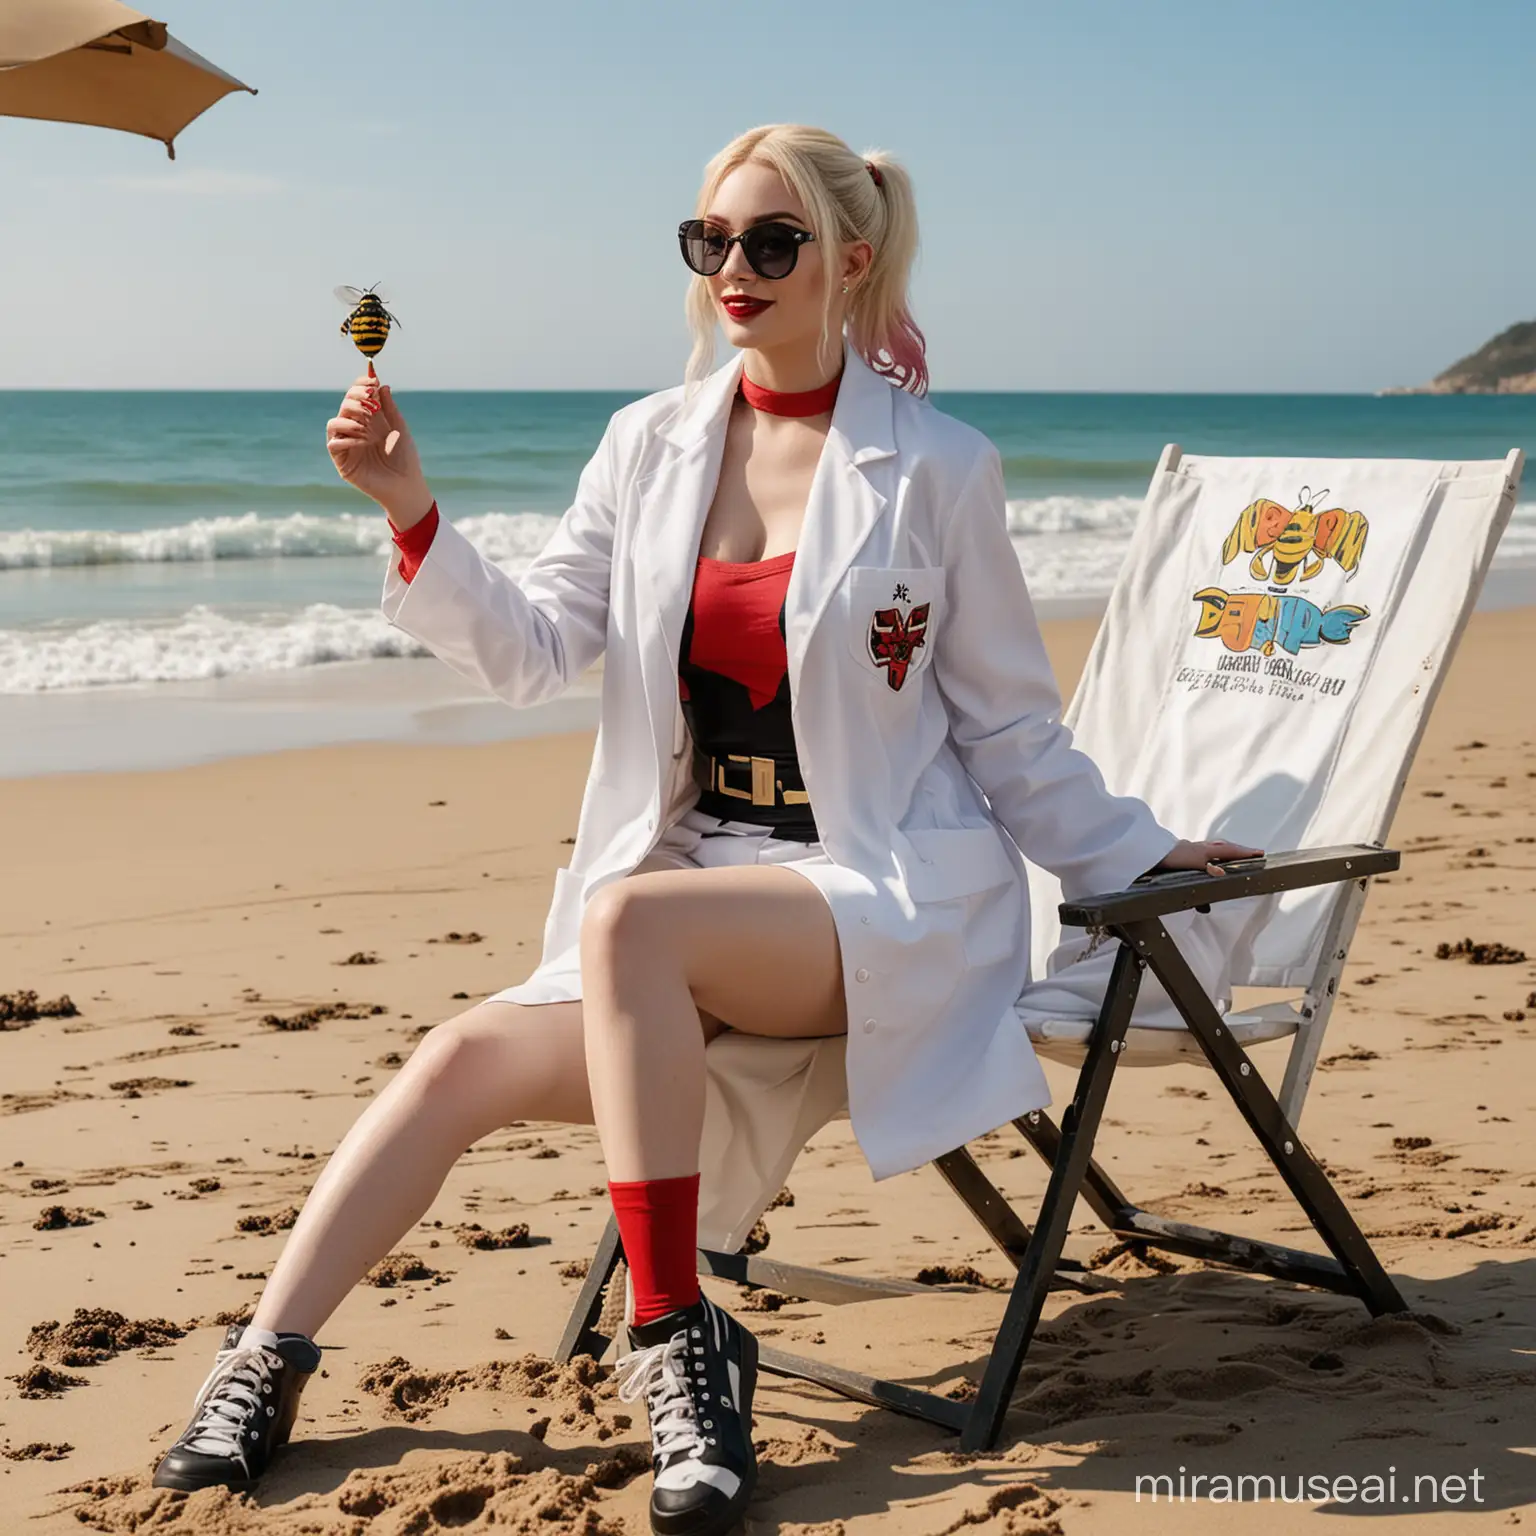 Harley Quinn in Lab Coat Swatting Bee Making Italian Gesture on Beach